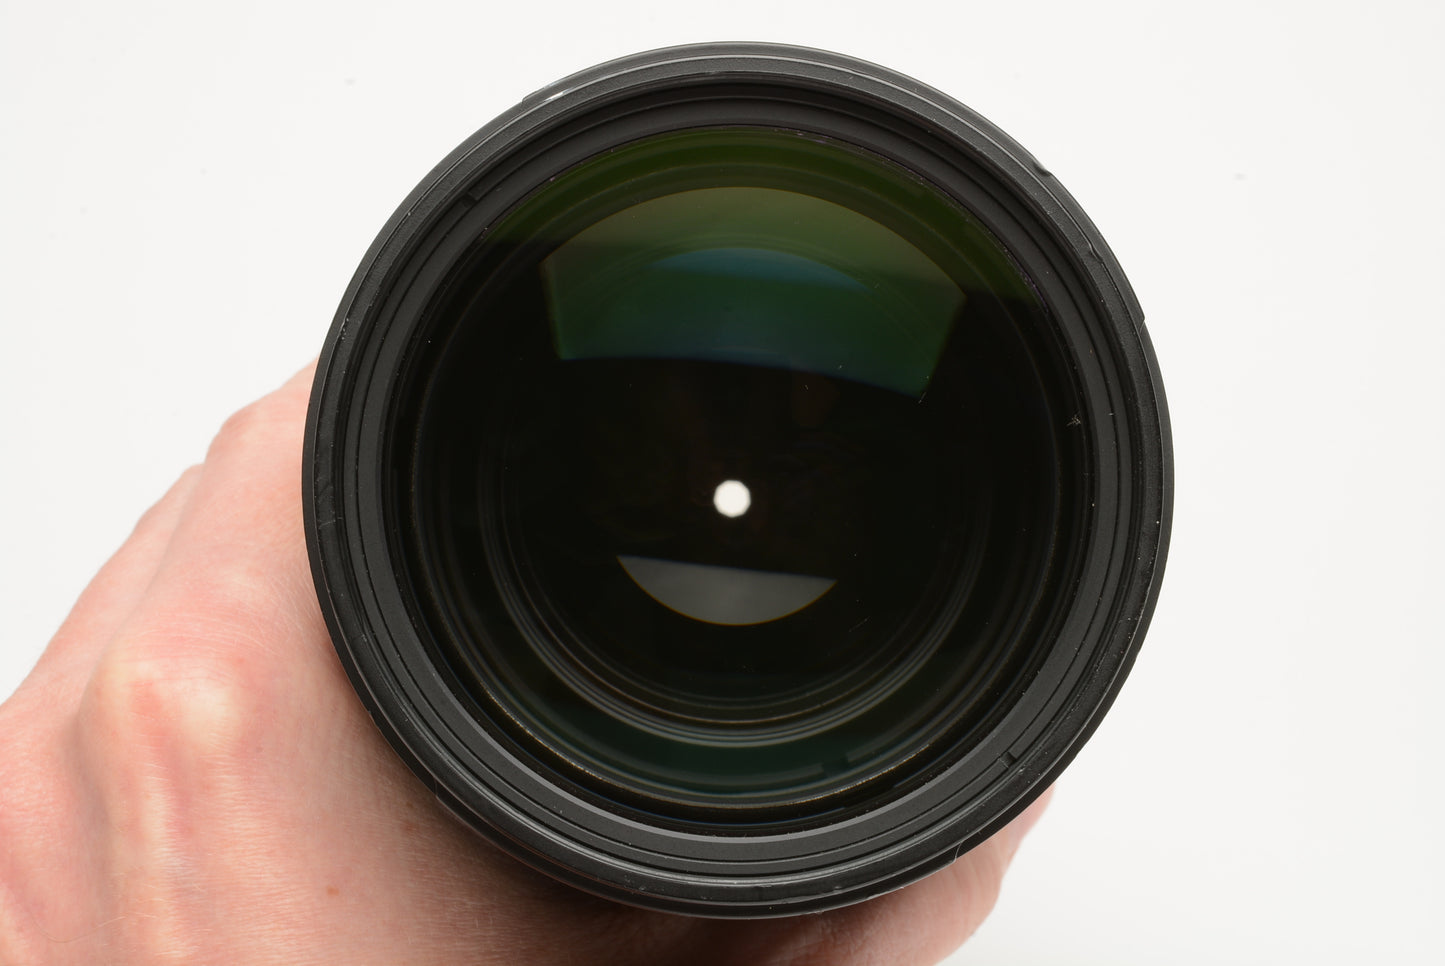 Sigma AF 70-200mm f2.8 II macro HSM EX APO DG lens, case, Sony A mount lens